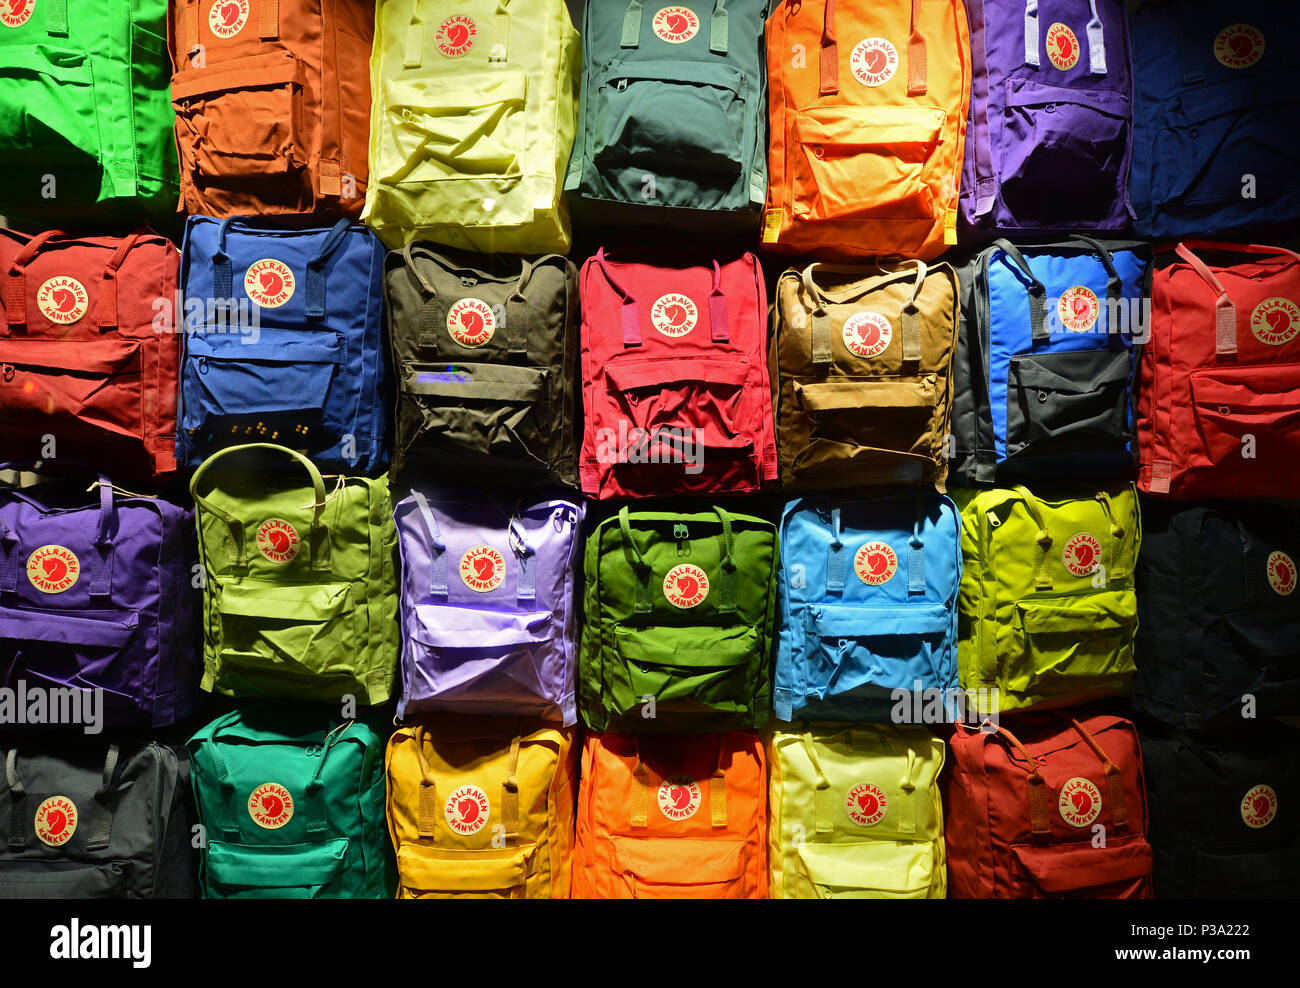 Oldenburg, Germany, Backpacks by Fjaellraeven Stock Photo - Alamy